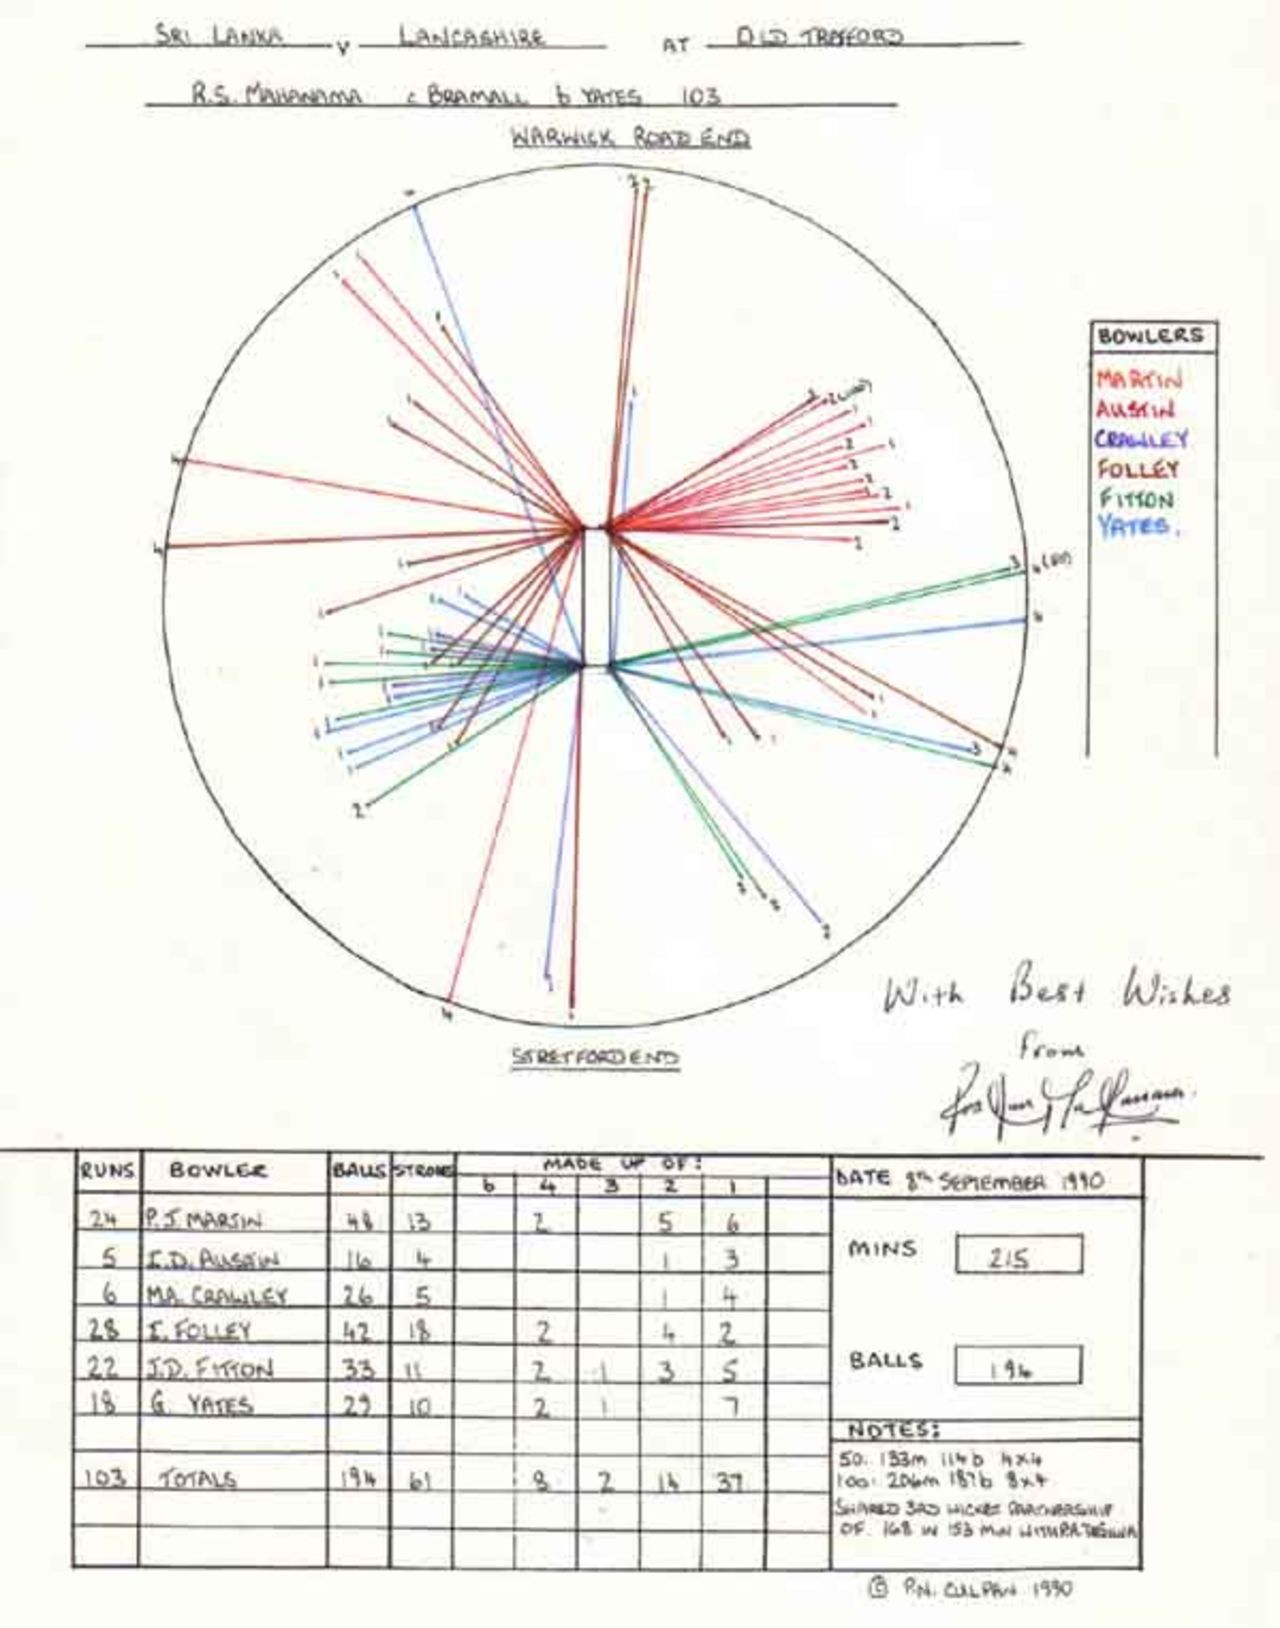 Wagon Wheel of Roshan Mahanama's 103 v Lancashire, Manchester 8th September 1990